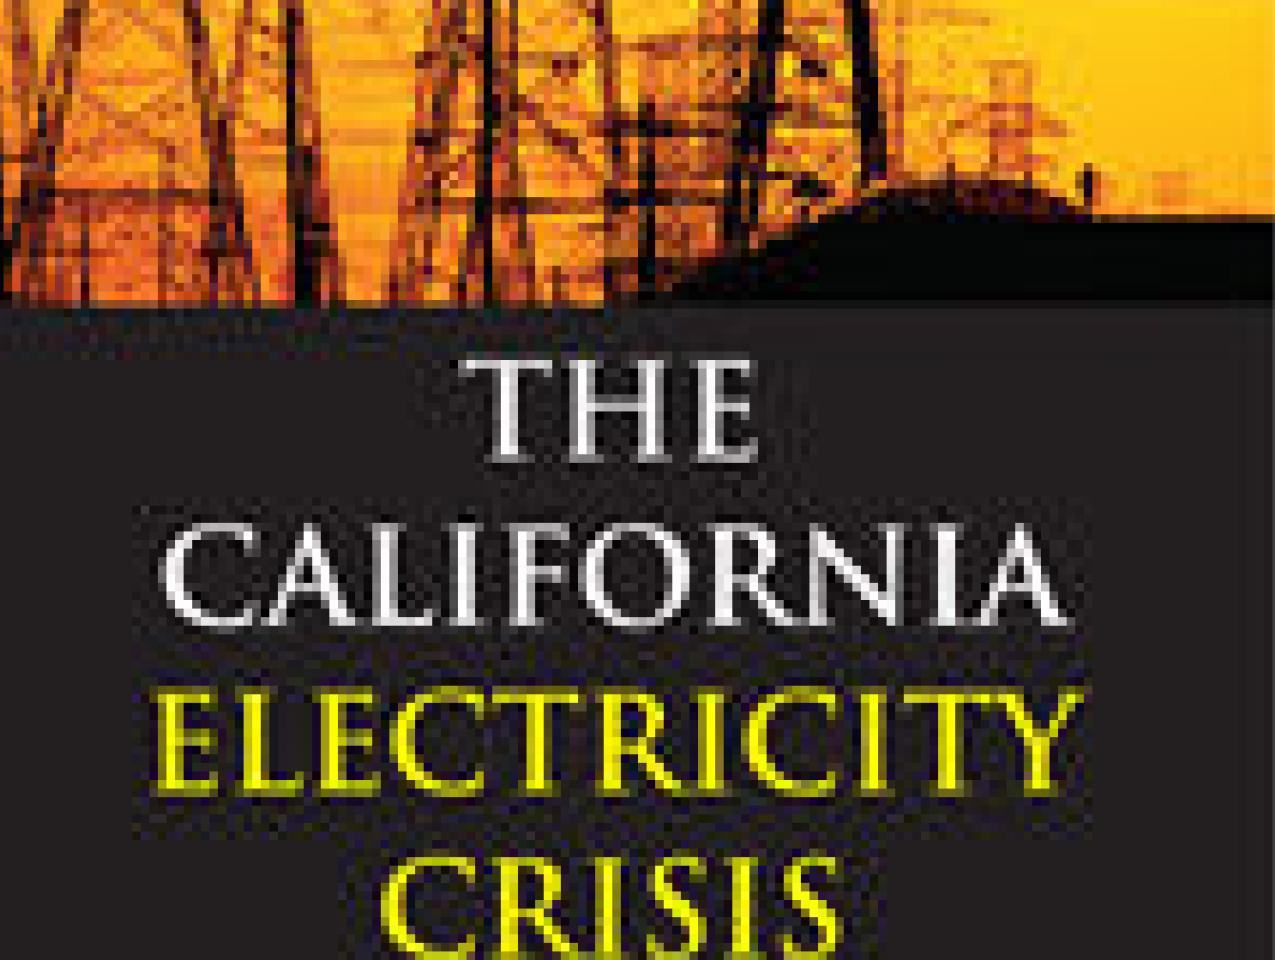 The California Electricity Crisis